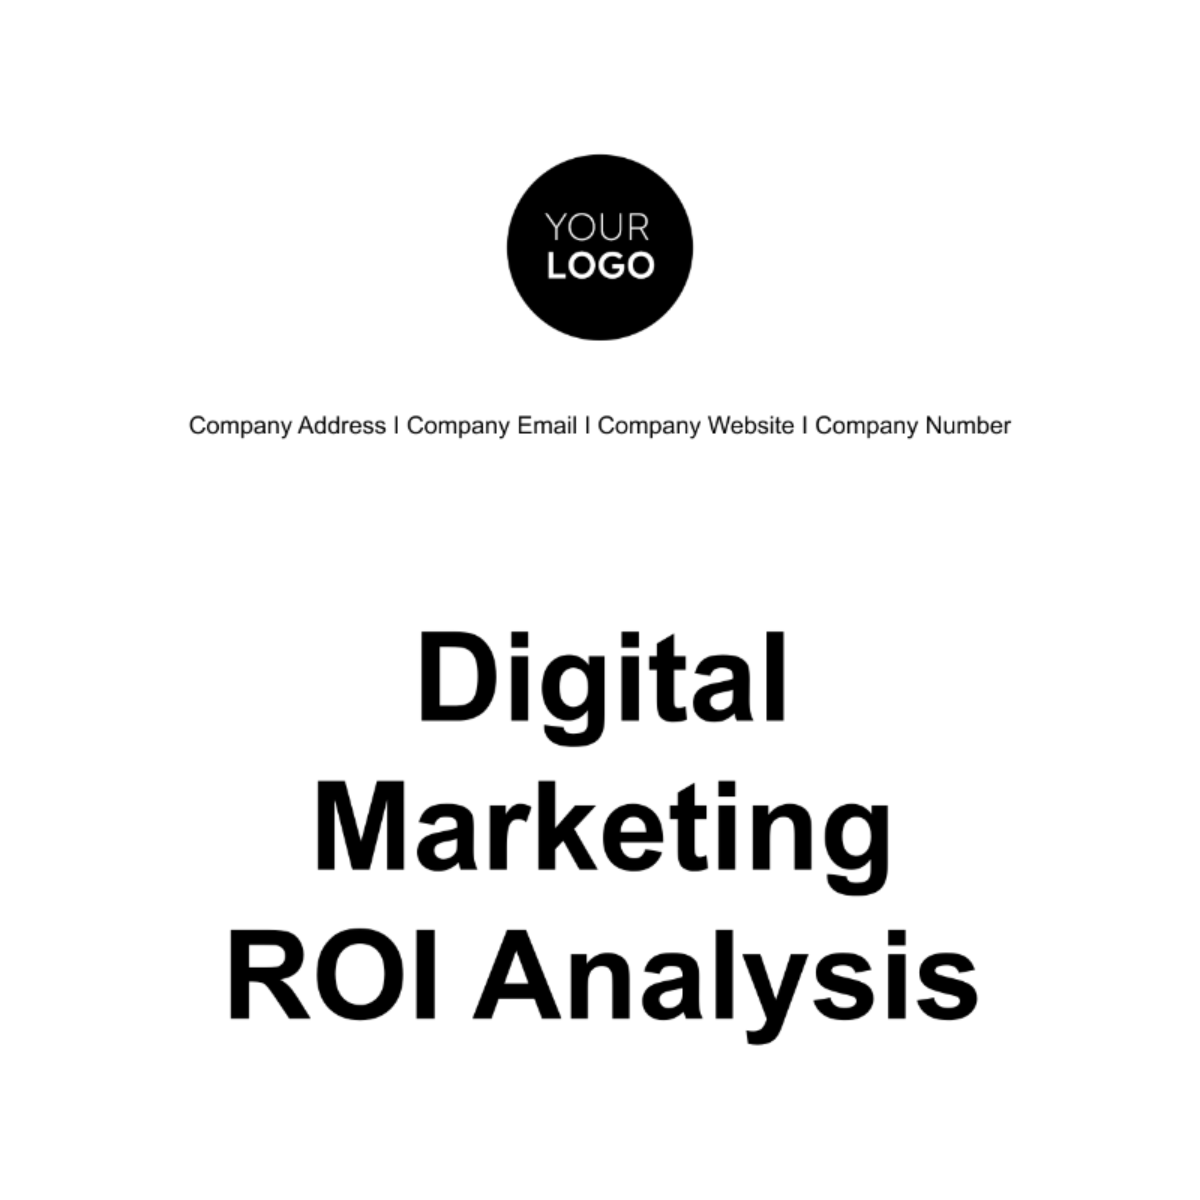 Digital Marketing ROI Analysis Template